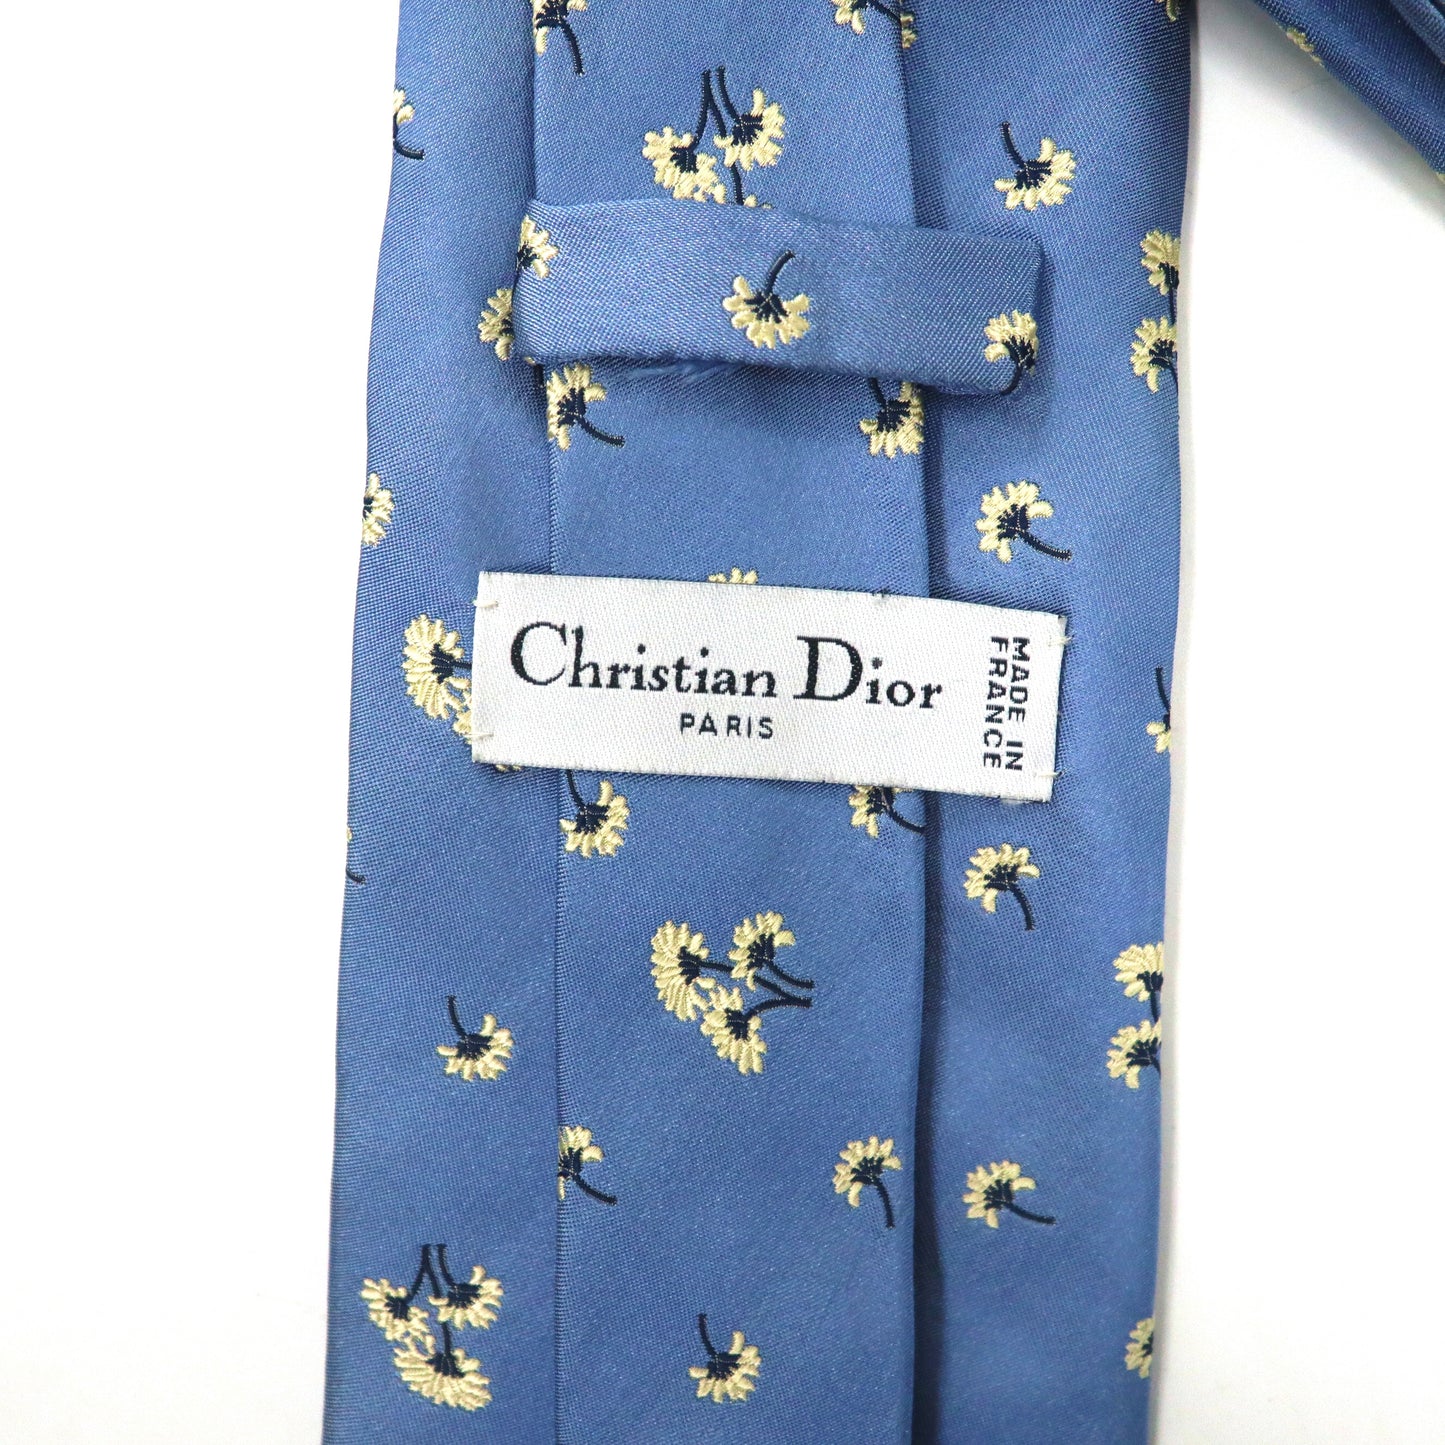 Christian Dior ネクタイ ブルー シルク 花柄 オールド フランス製